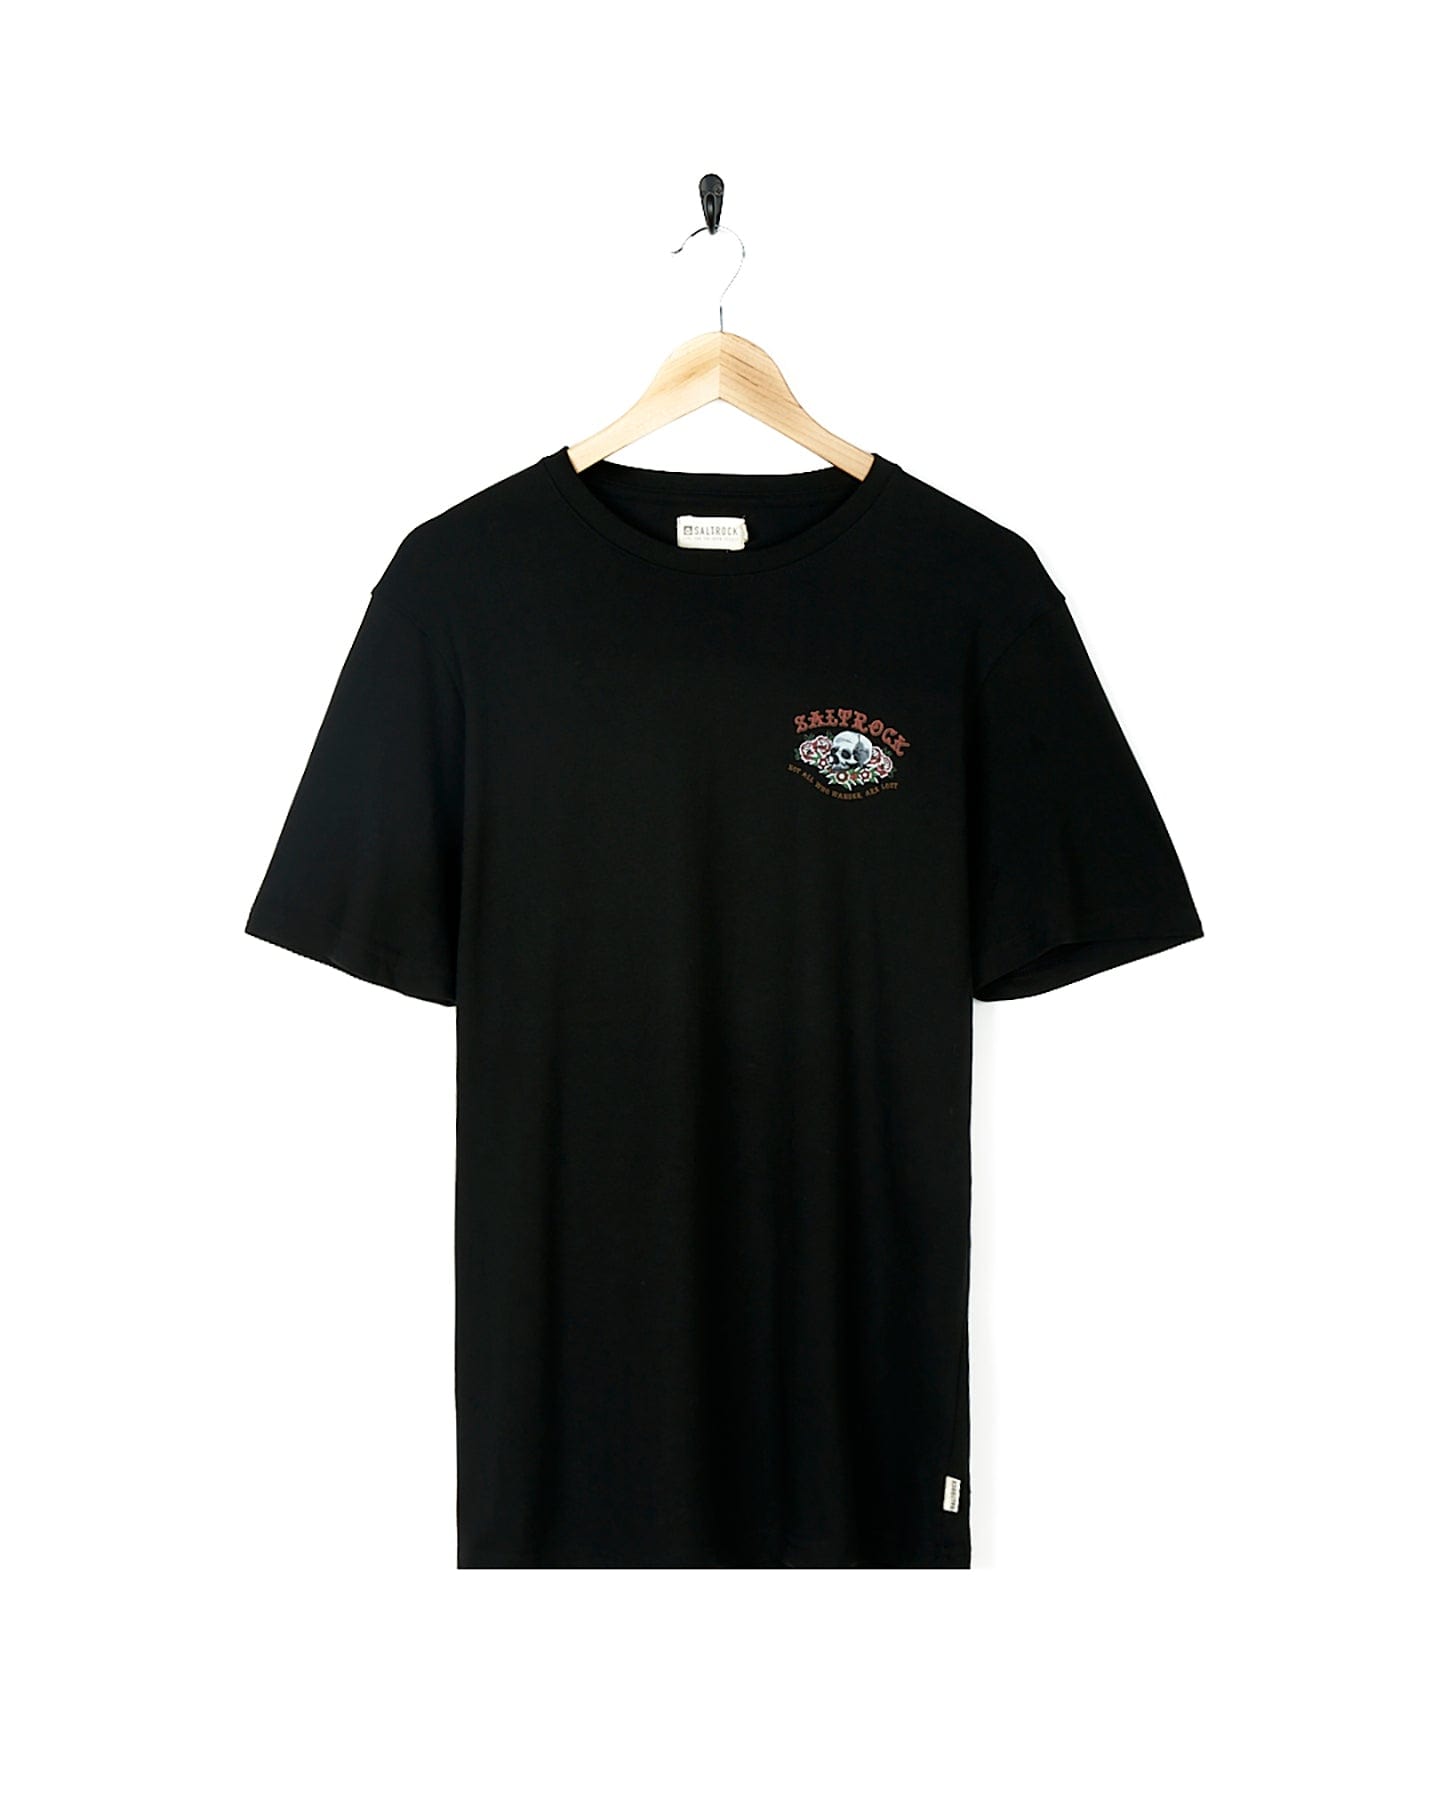 A Saltrock Tattoo Island 2 - Mens Short Sleeve T-Shirt - Black with an orange logo on it.